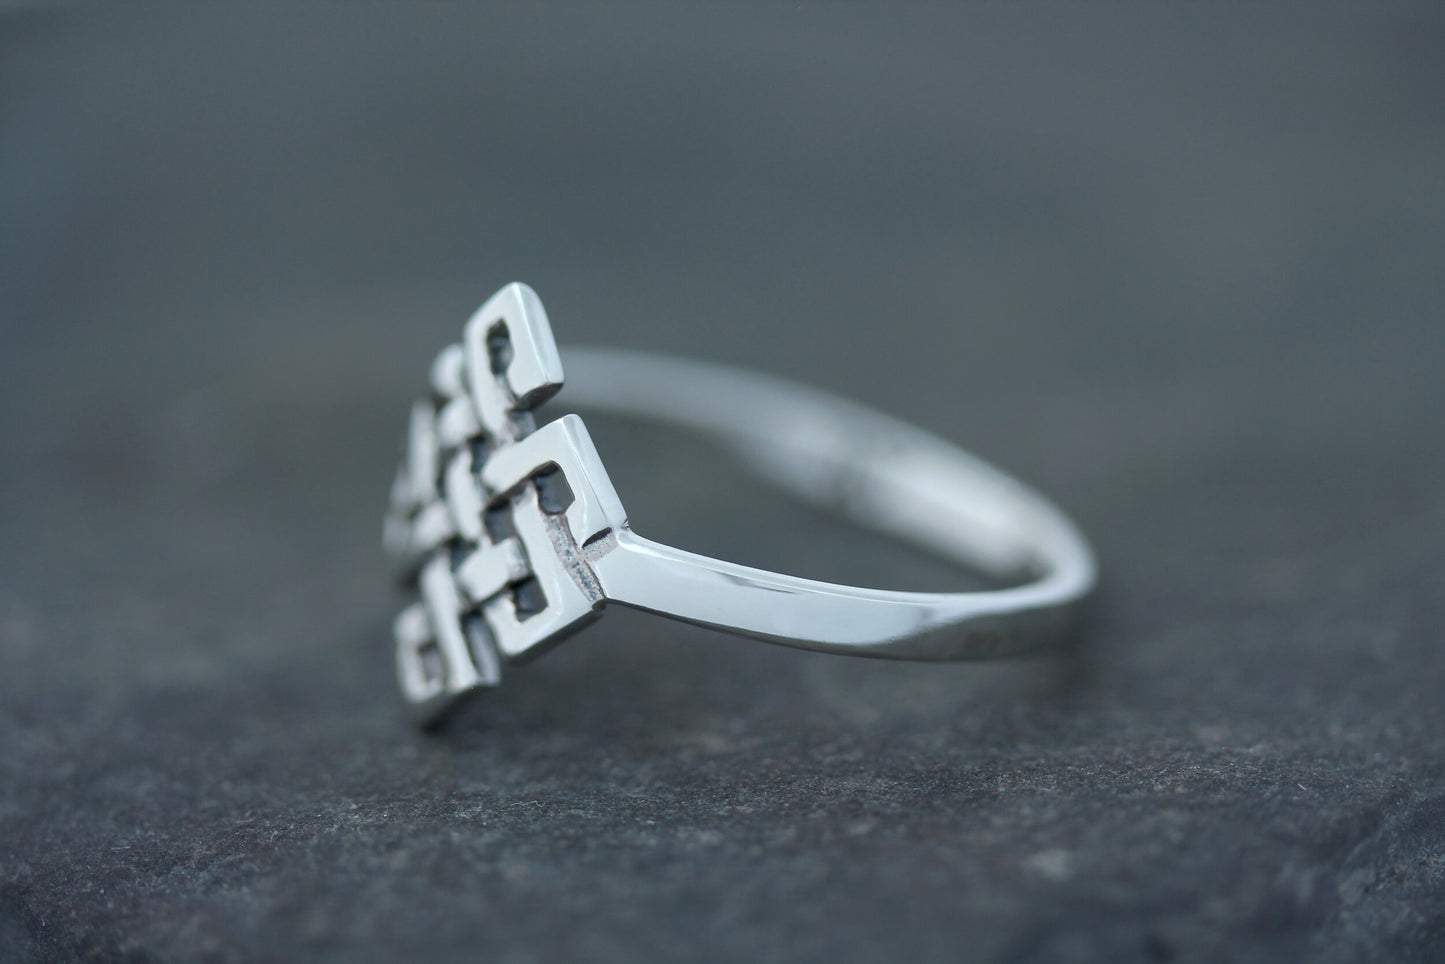 Celtic Knot Ring - Vertical Padlock Knot